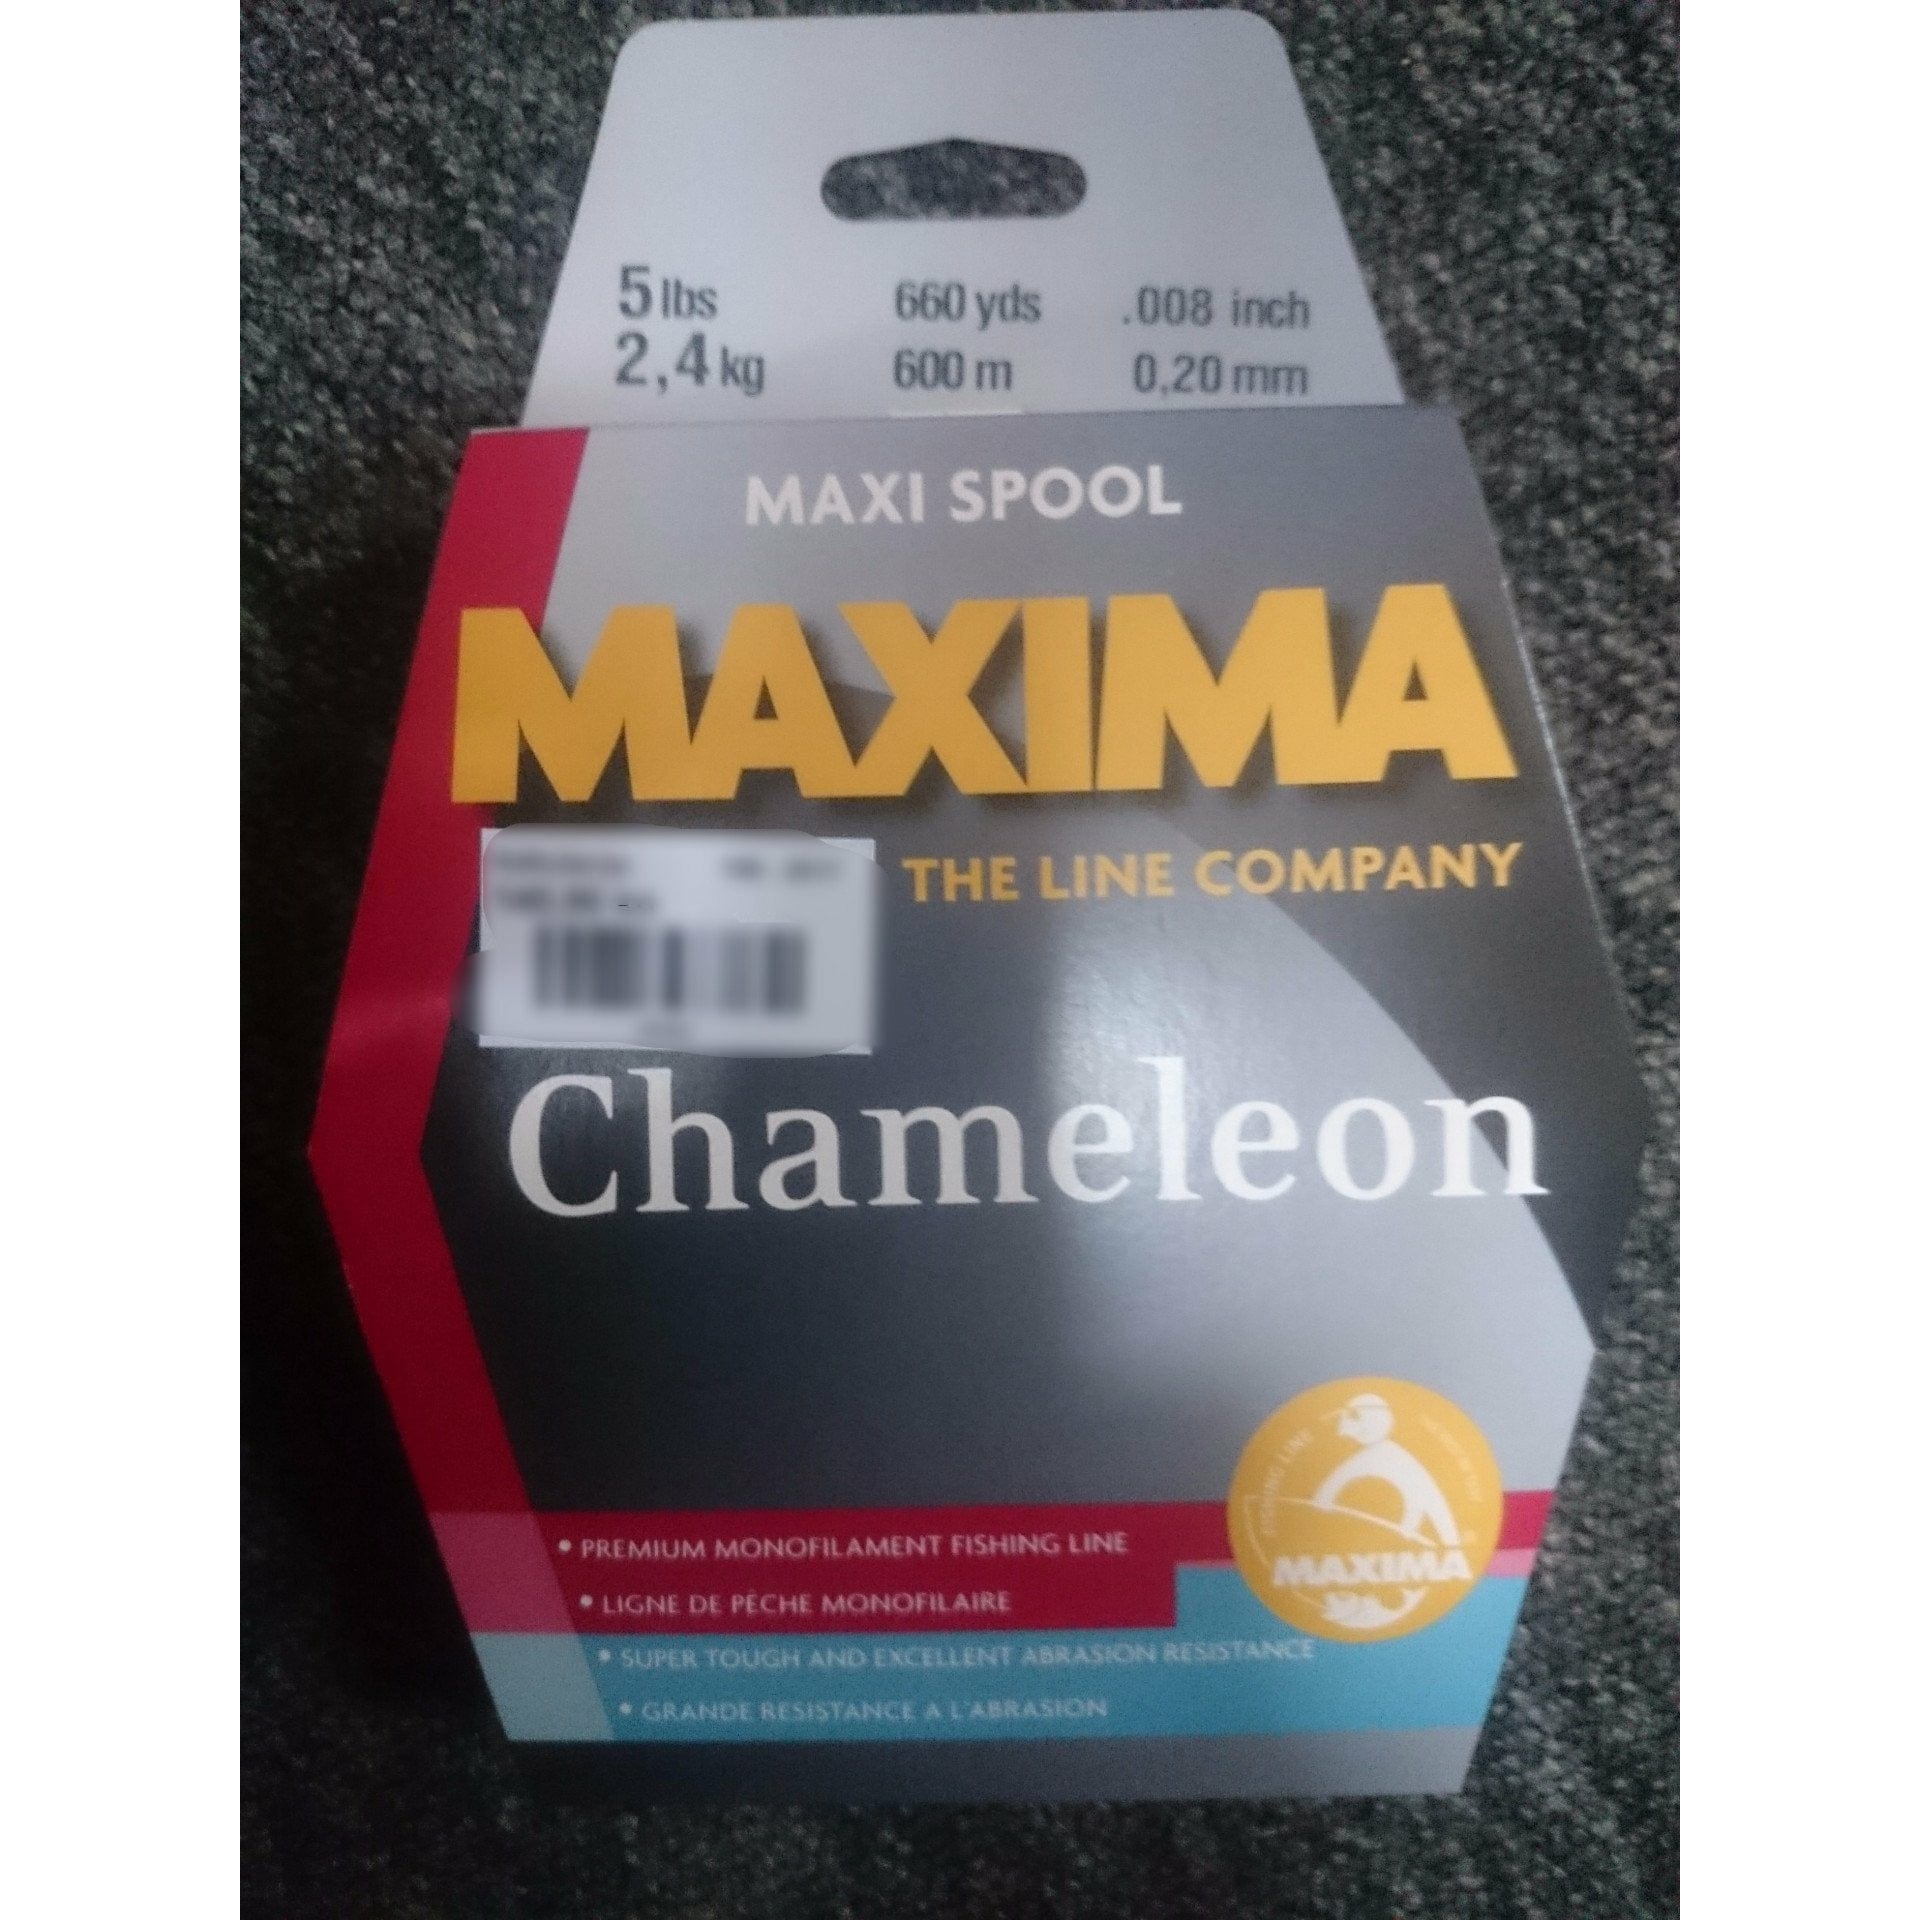 MAXIMA Maxi Spool Chameleon 2.4kg / 600m / 0.20mm - MatchFishing